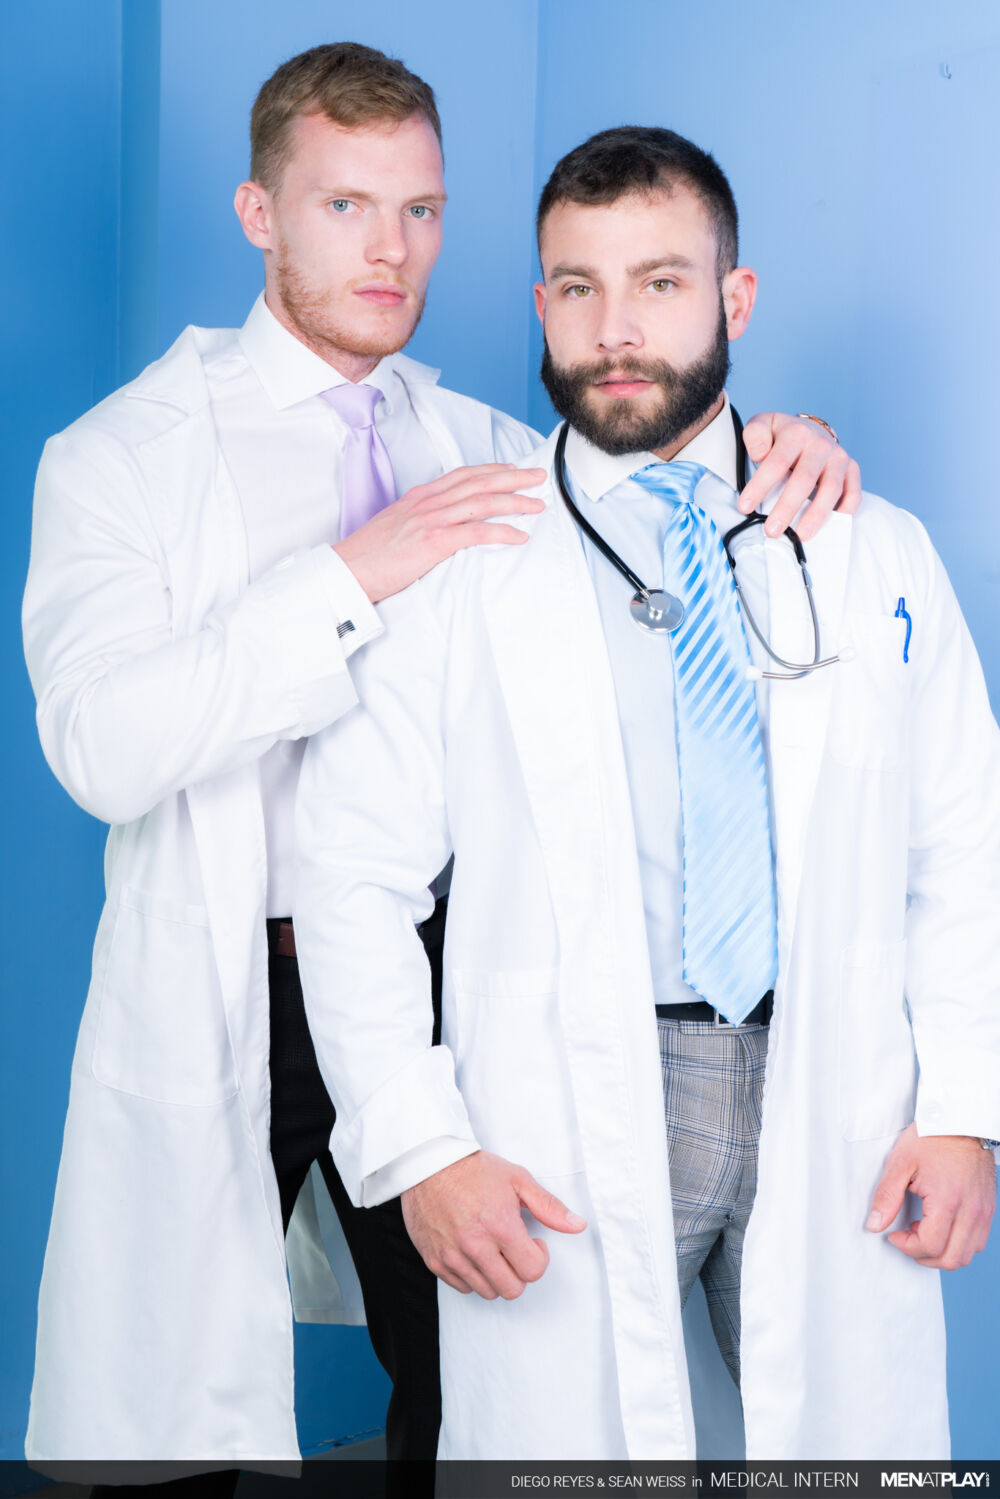 Medical Intern: Diego Reyes & Sean Weiss